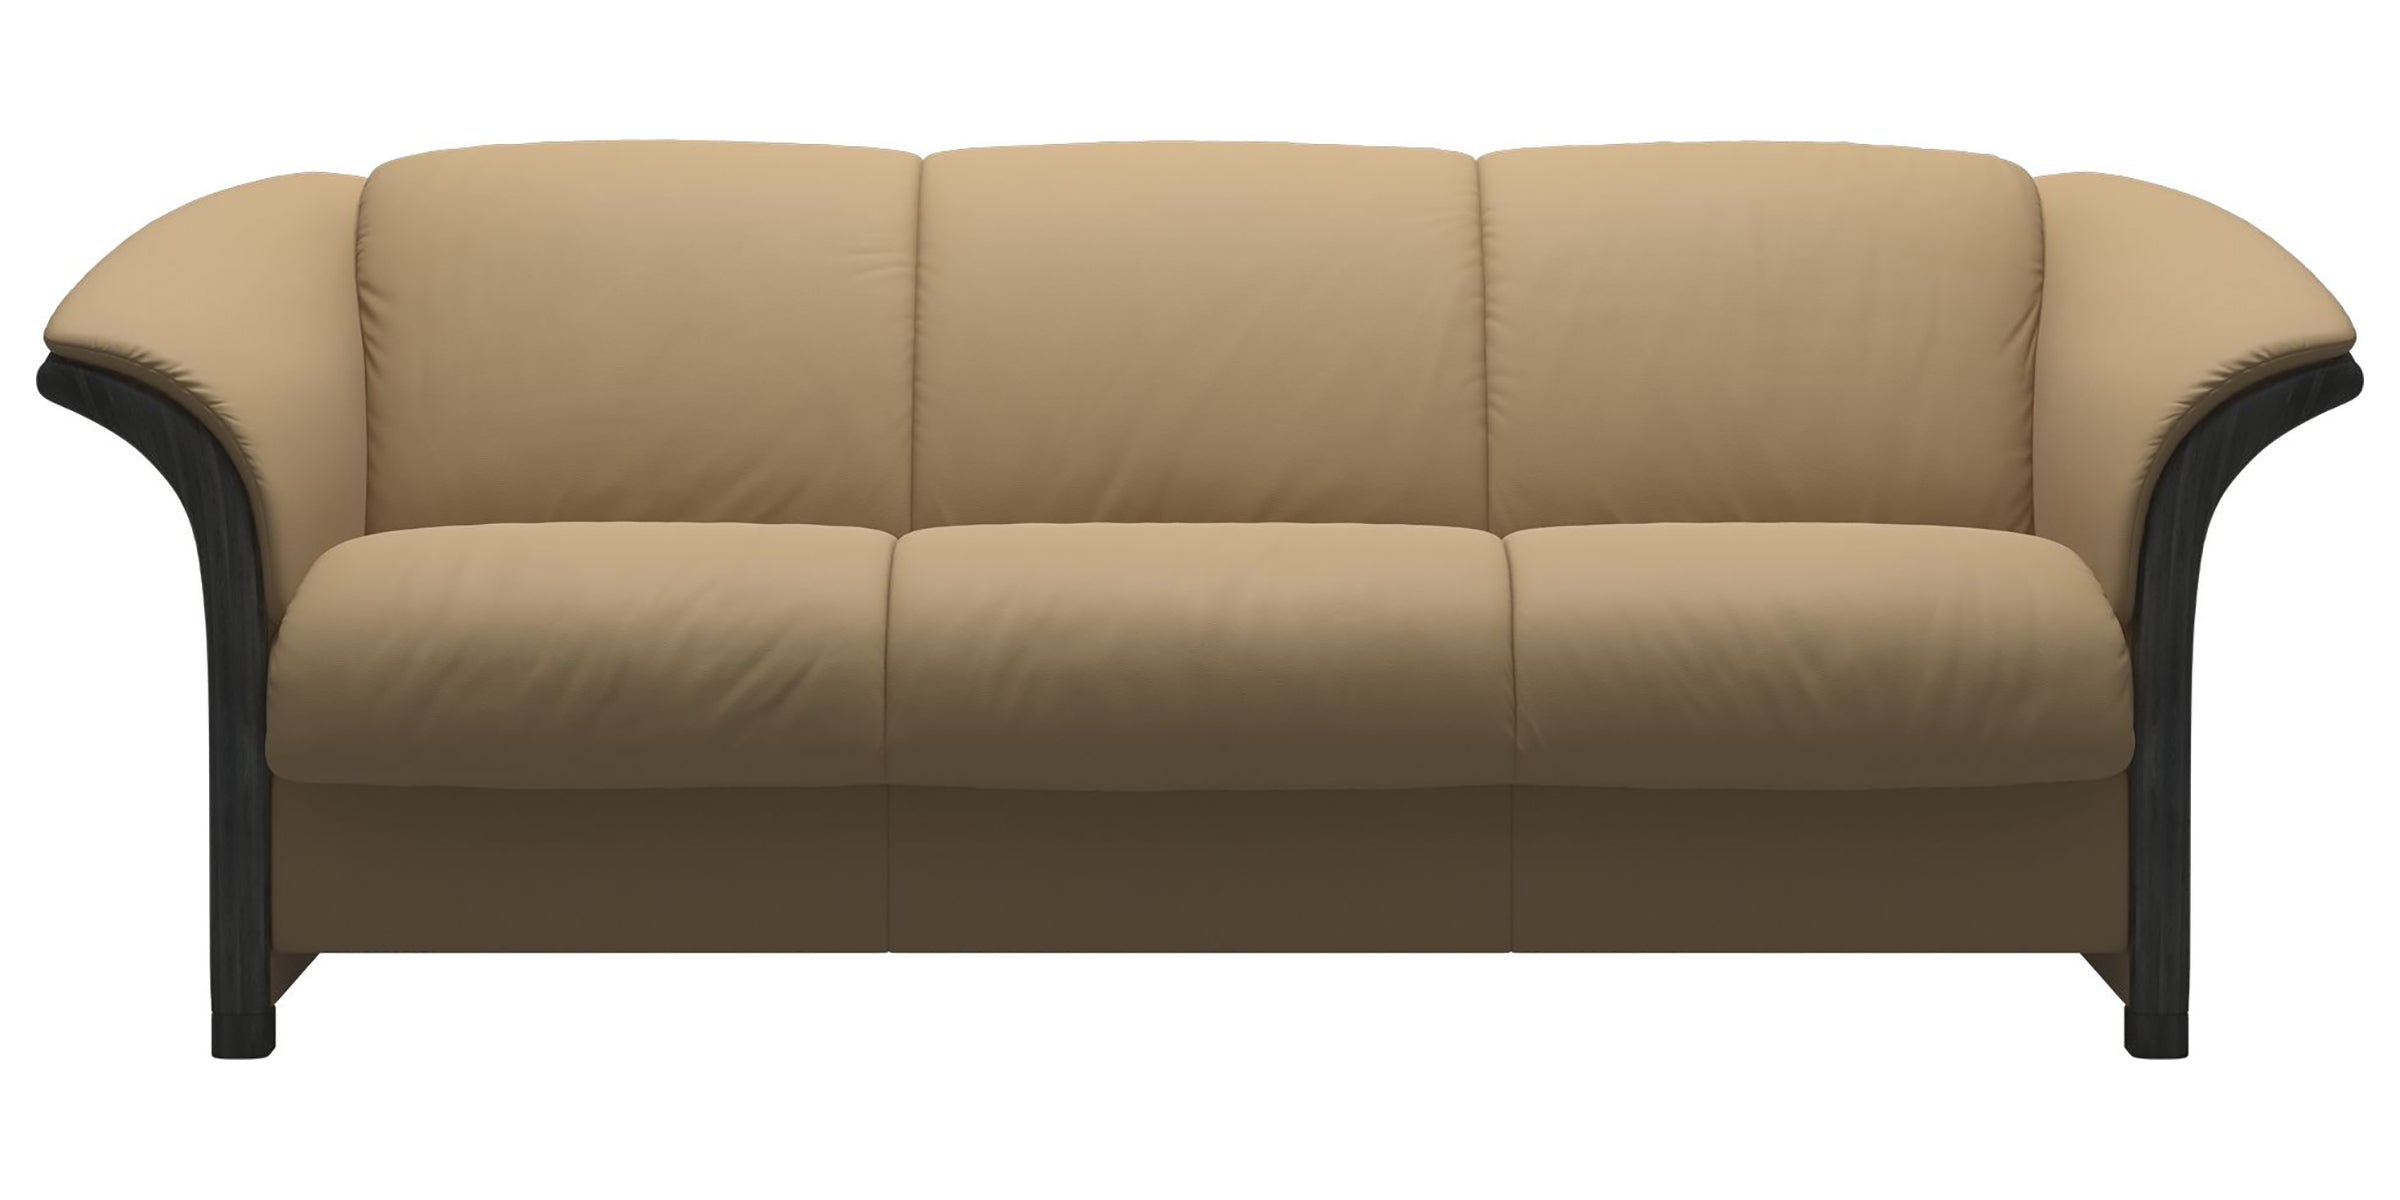 Paloma Leather Sand and Grey Arm Trim | Stressless Manhattan Sofa | Valley Ridge Furniture